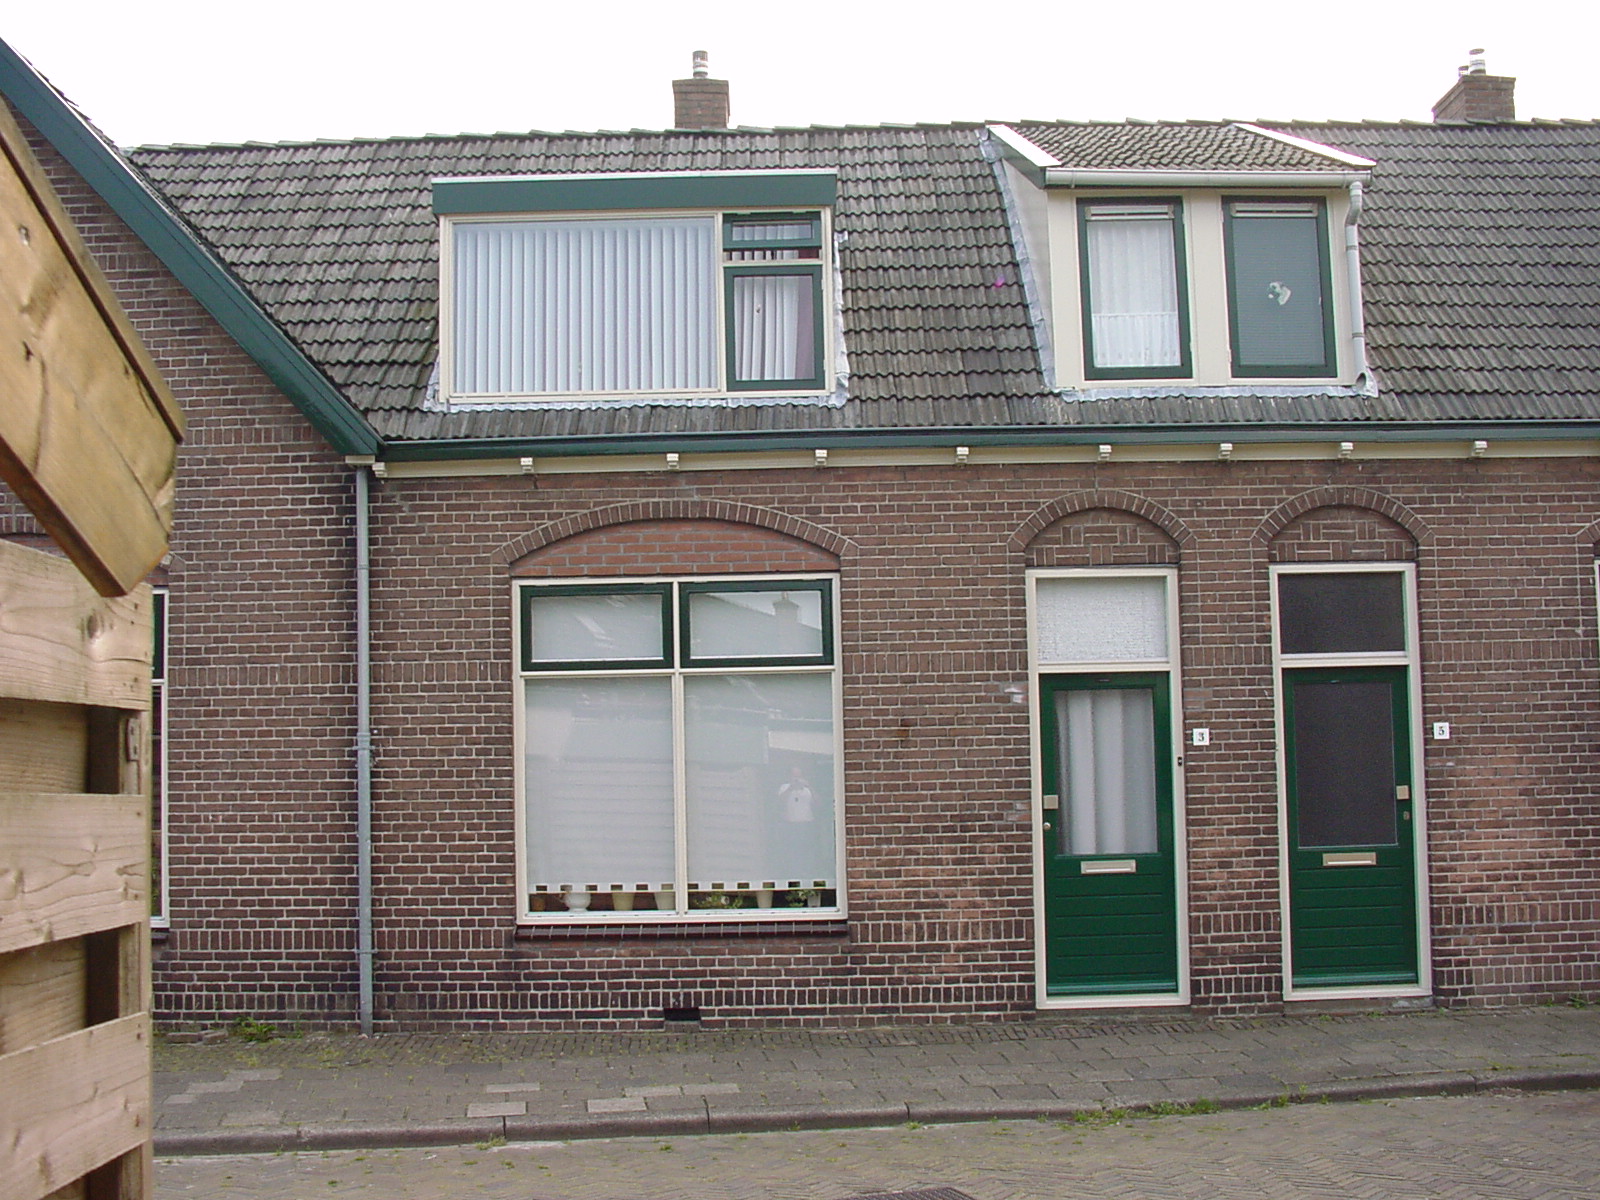 Oostwijkdwarsstraat 3, 8331 GH Steenwijk, Nederland